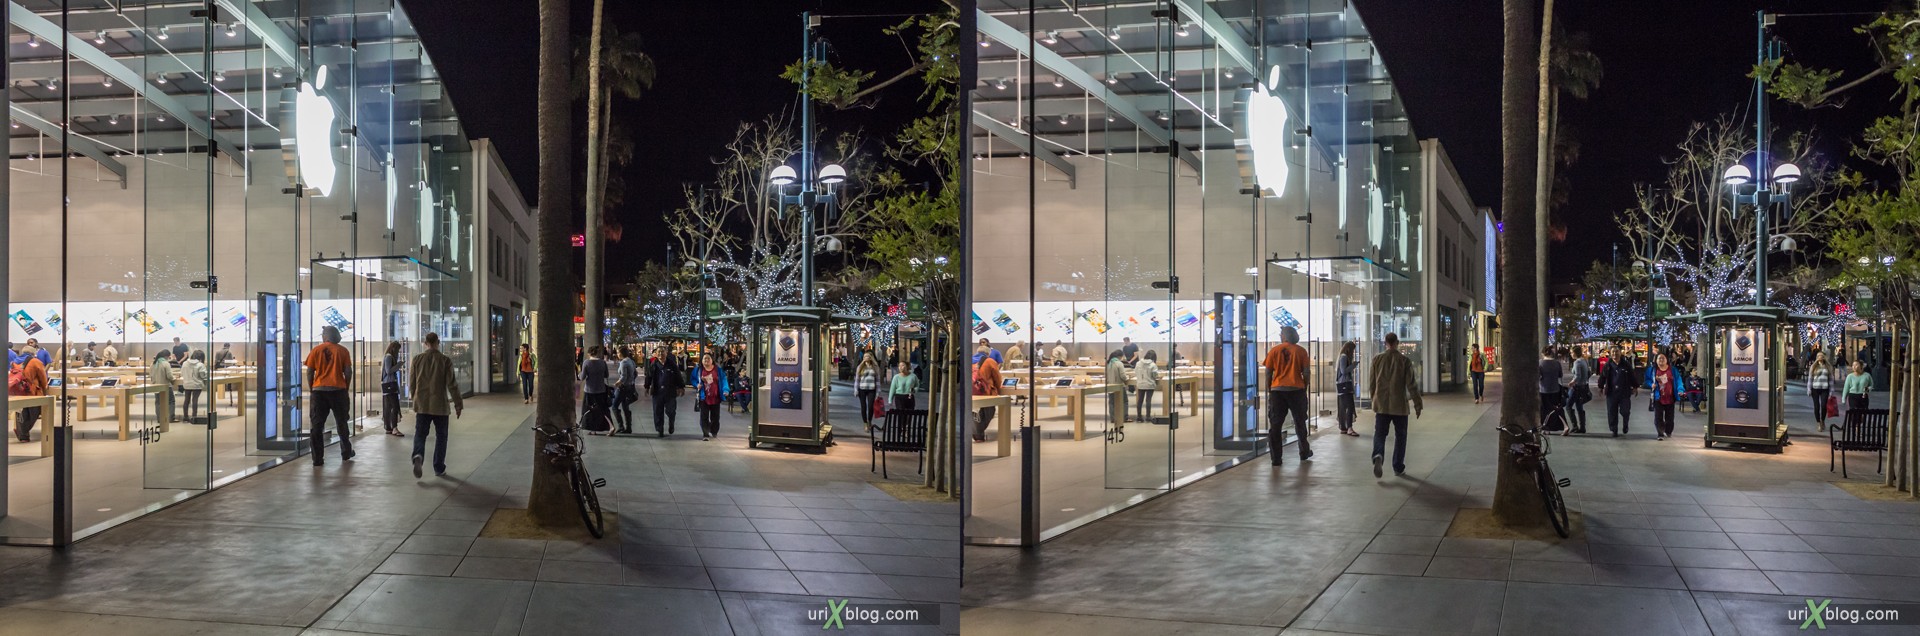 2013, Apple, Apple Store, 1415 3rd Street Promenade, Santa Monica, Los Angeles, LA, USA, 3D, stereo pair, cross-eyed, crossview, cross view stereo pair, stereoscopic